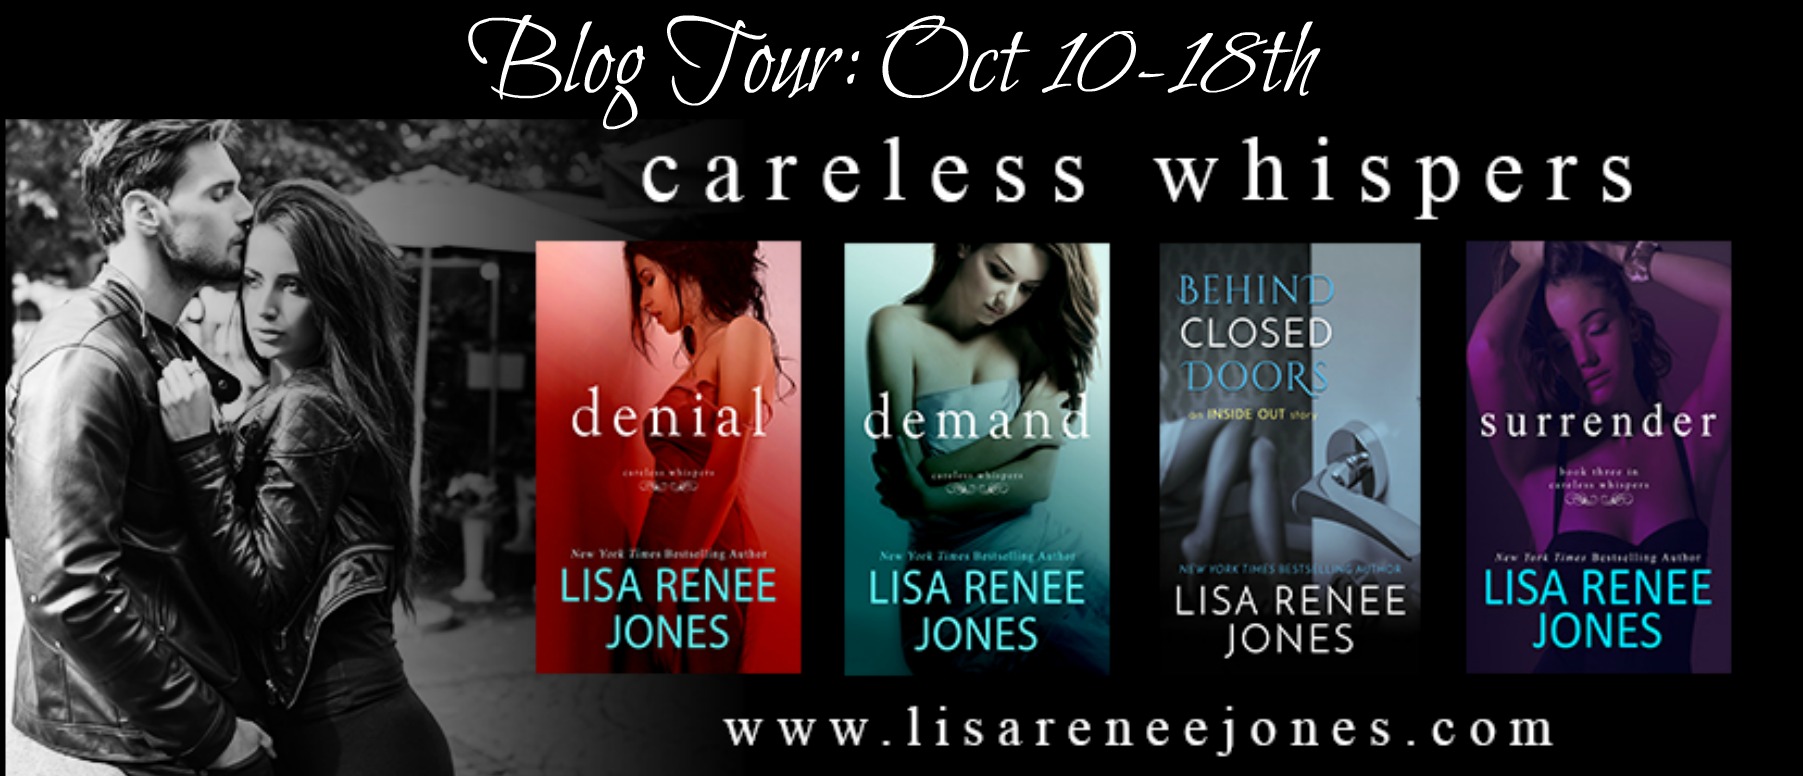 Careless Whisper Series by Lisa Renee Jones #Review #BlogTour @LisaReneeJones